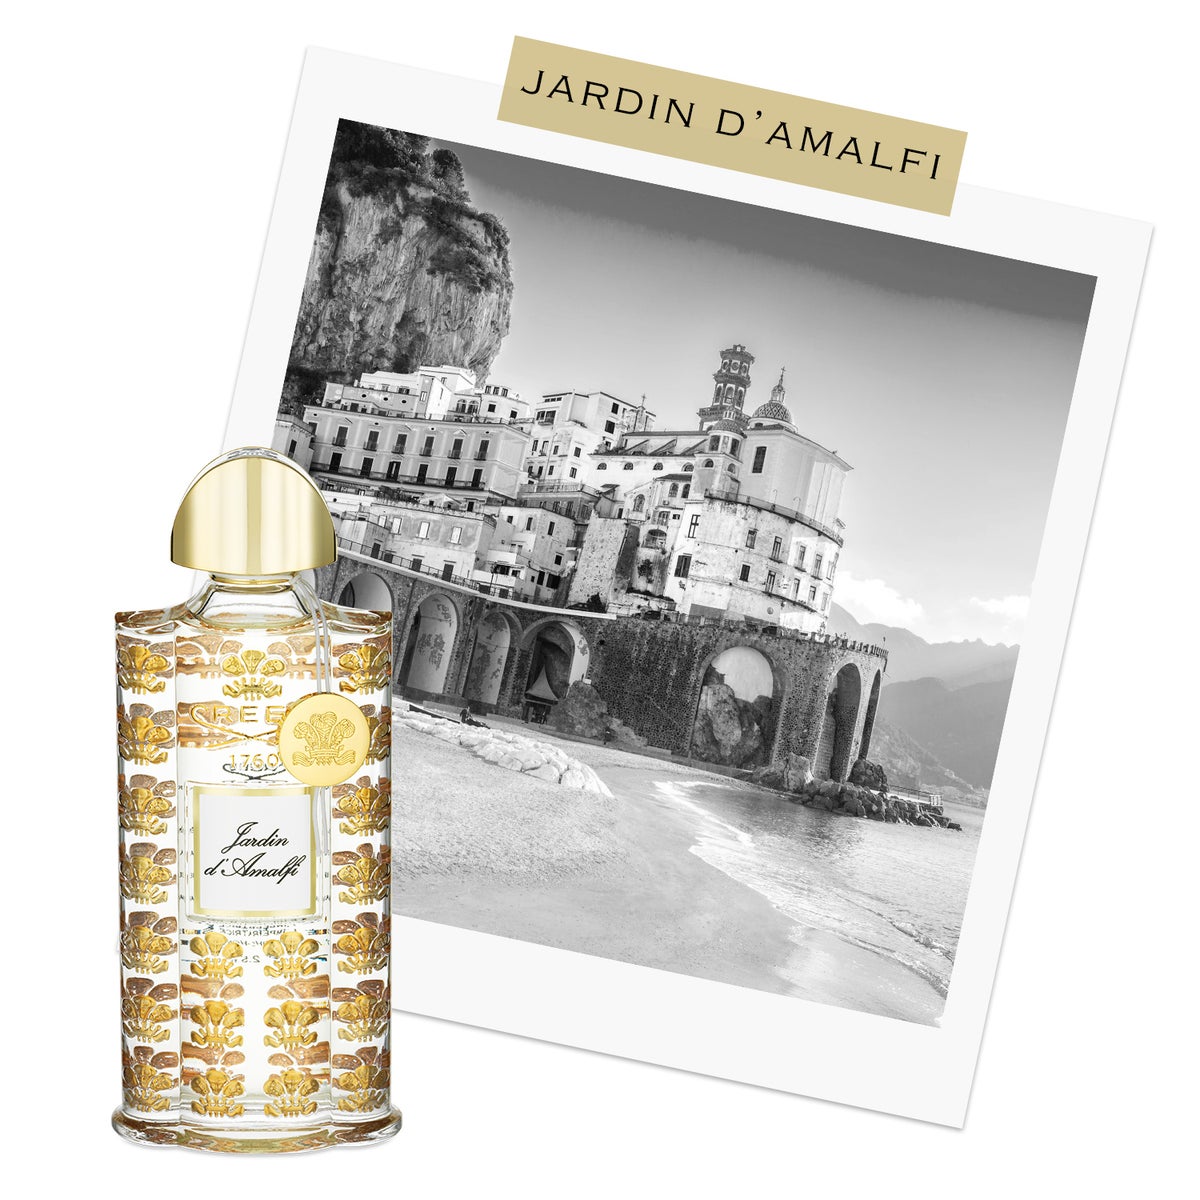 Jardin D'Amalfi bottle in front of black & white postcard of the Amalfi Coast